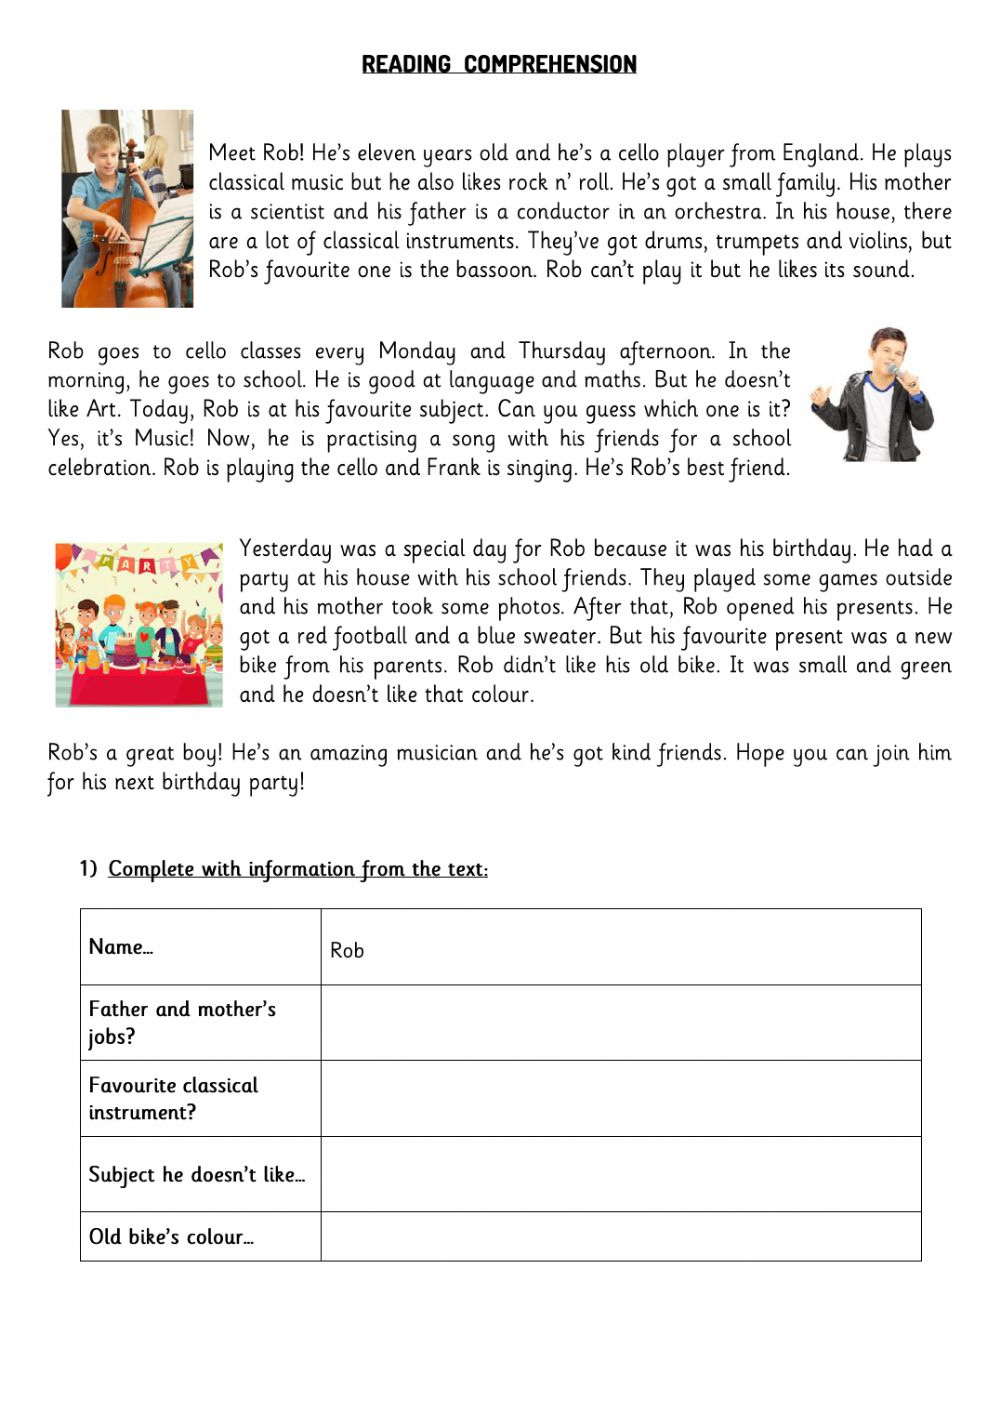 Reading Comprehension Practice Worksheet For 4th Grade